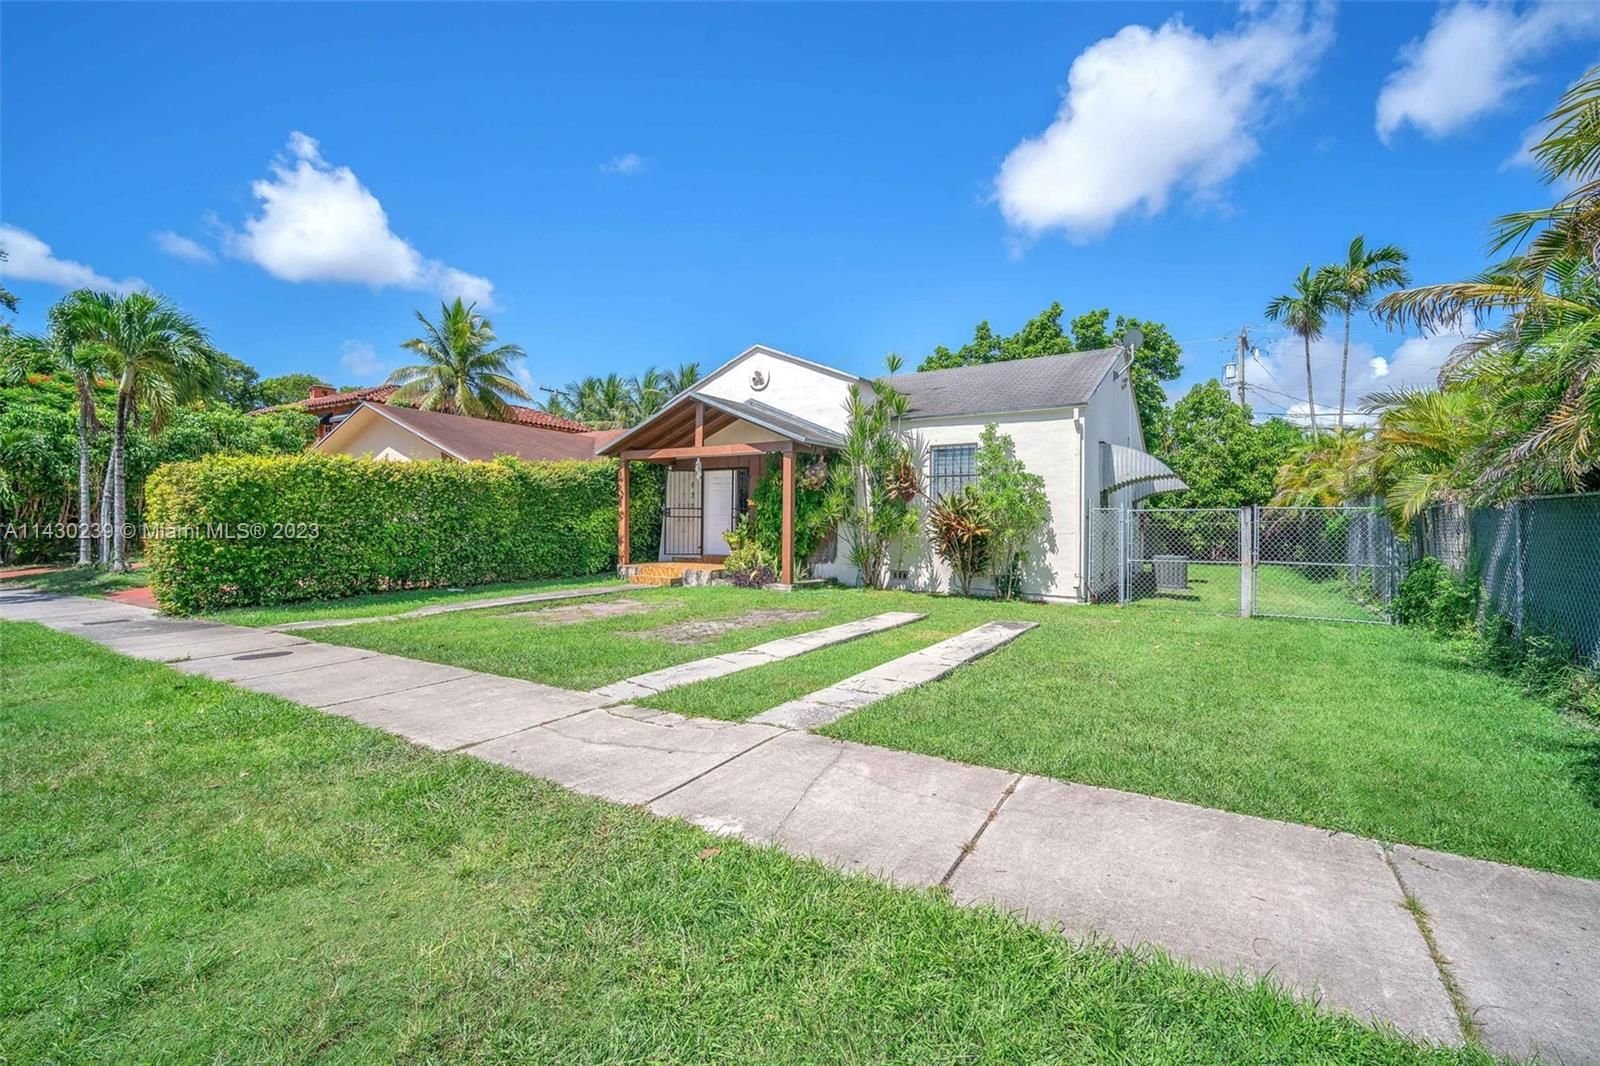 Real estate property located at 630 39th Ct, Miami-Dade County, Miami, FL